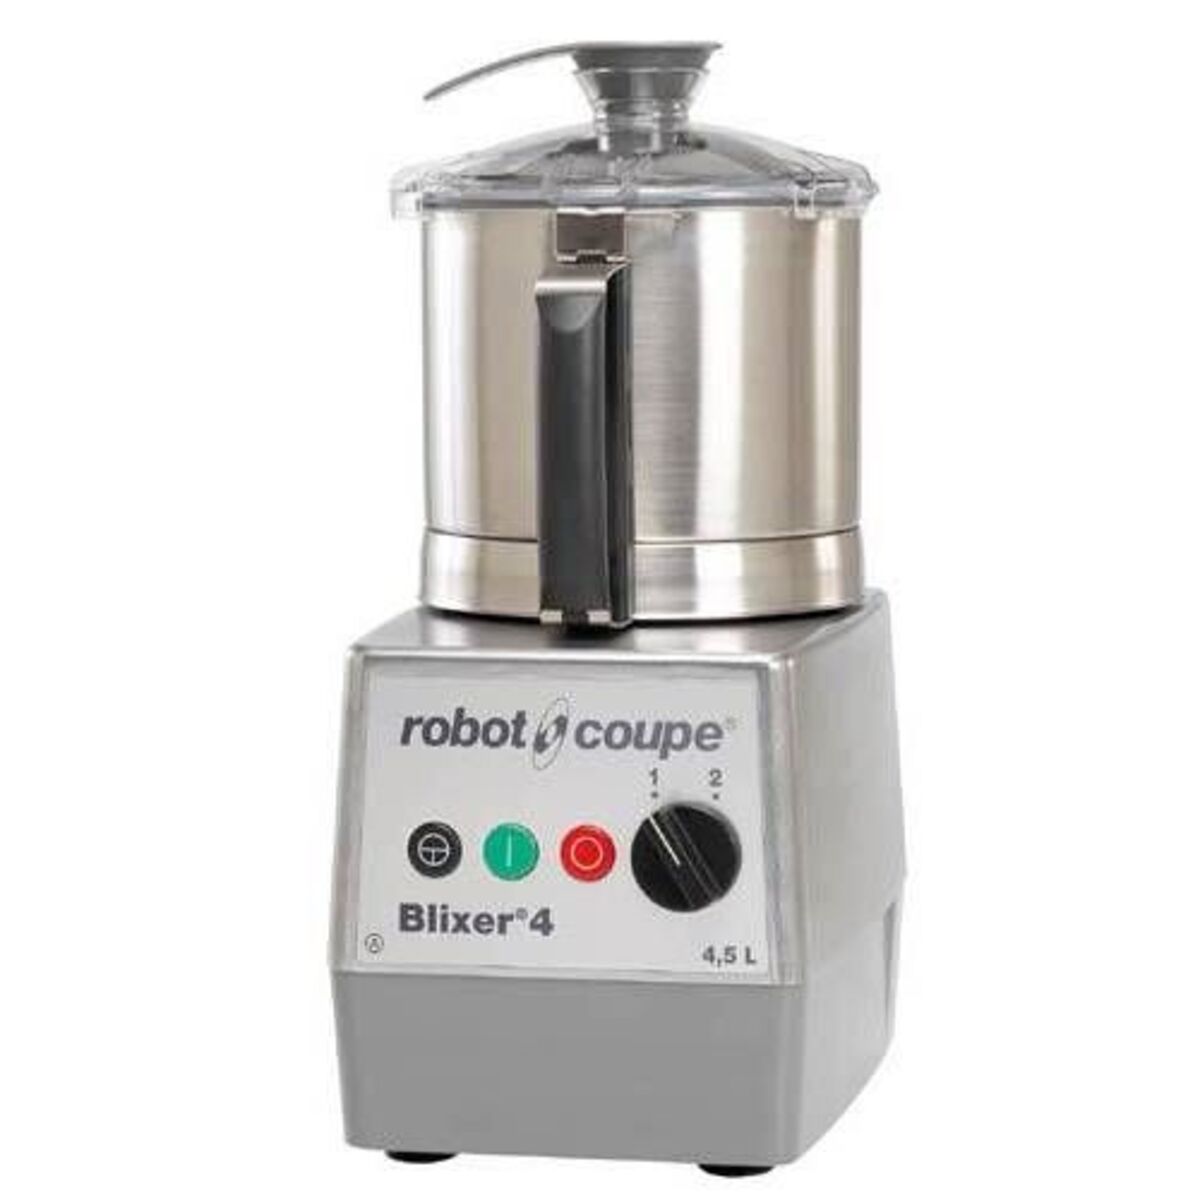 Blixer 4 robot coupe triphase 400/50/3